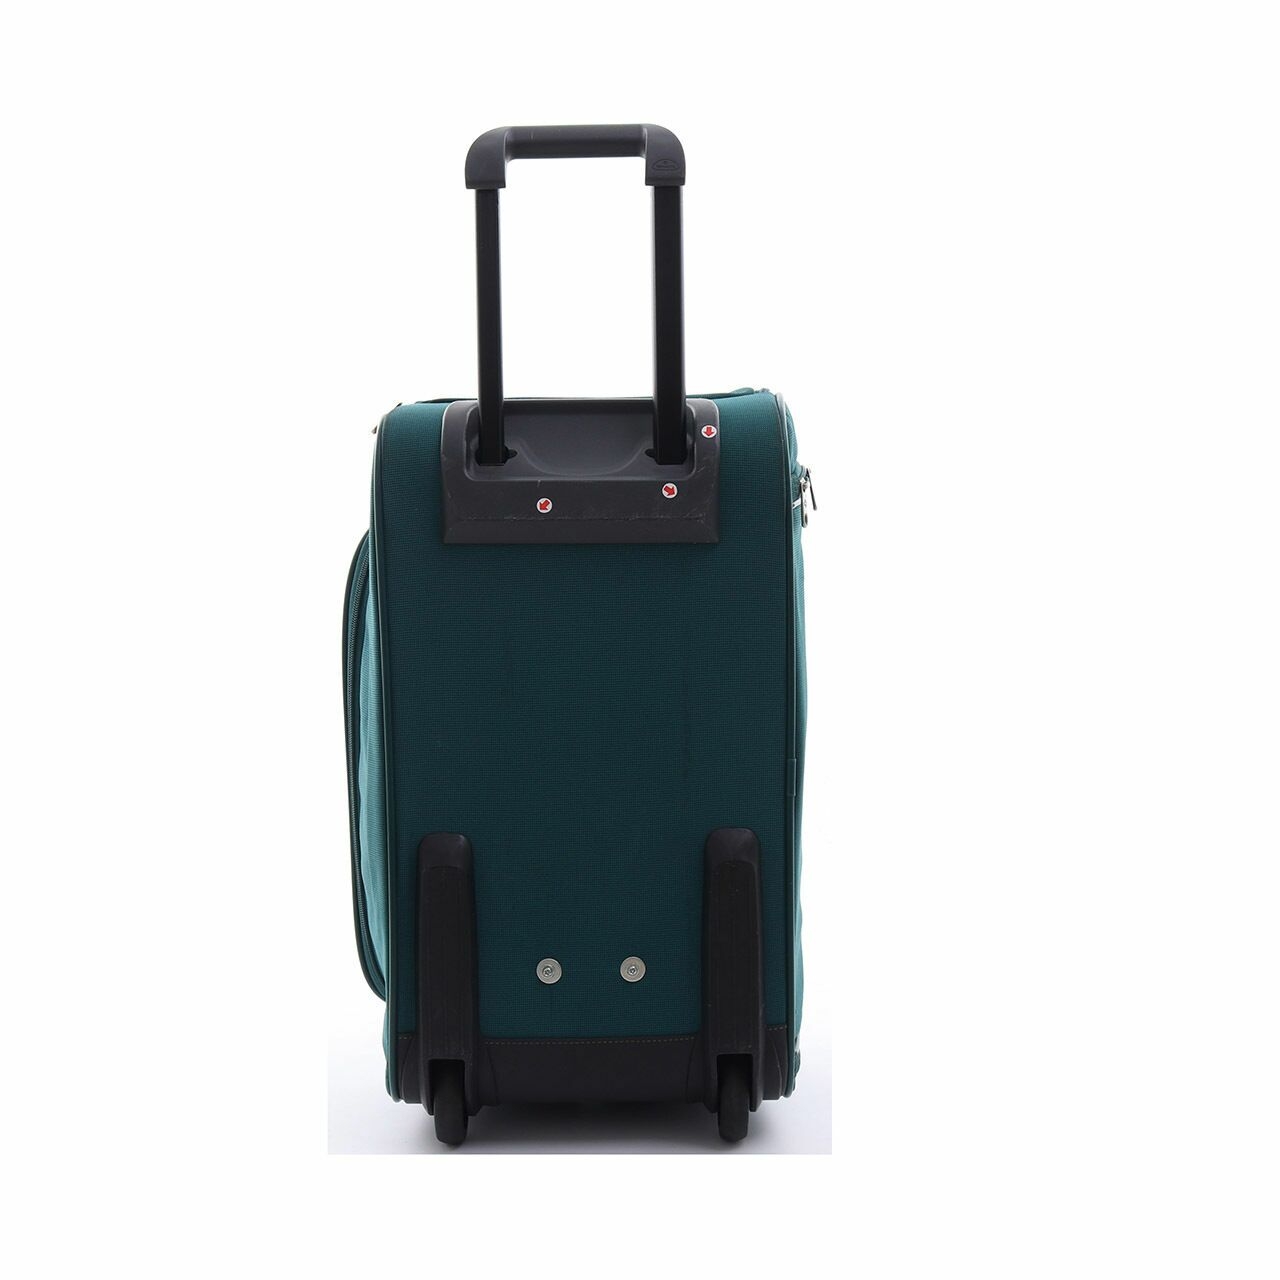 Samsonite Green Luggage and Travel